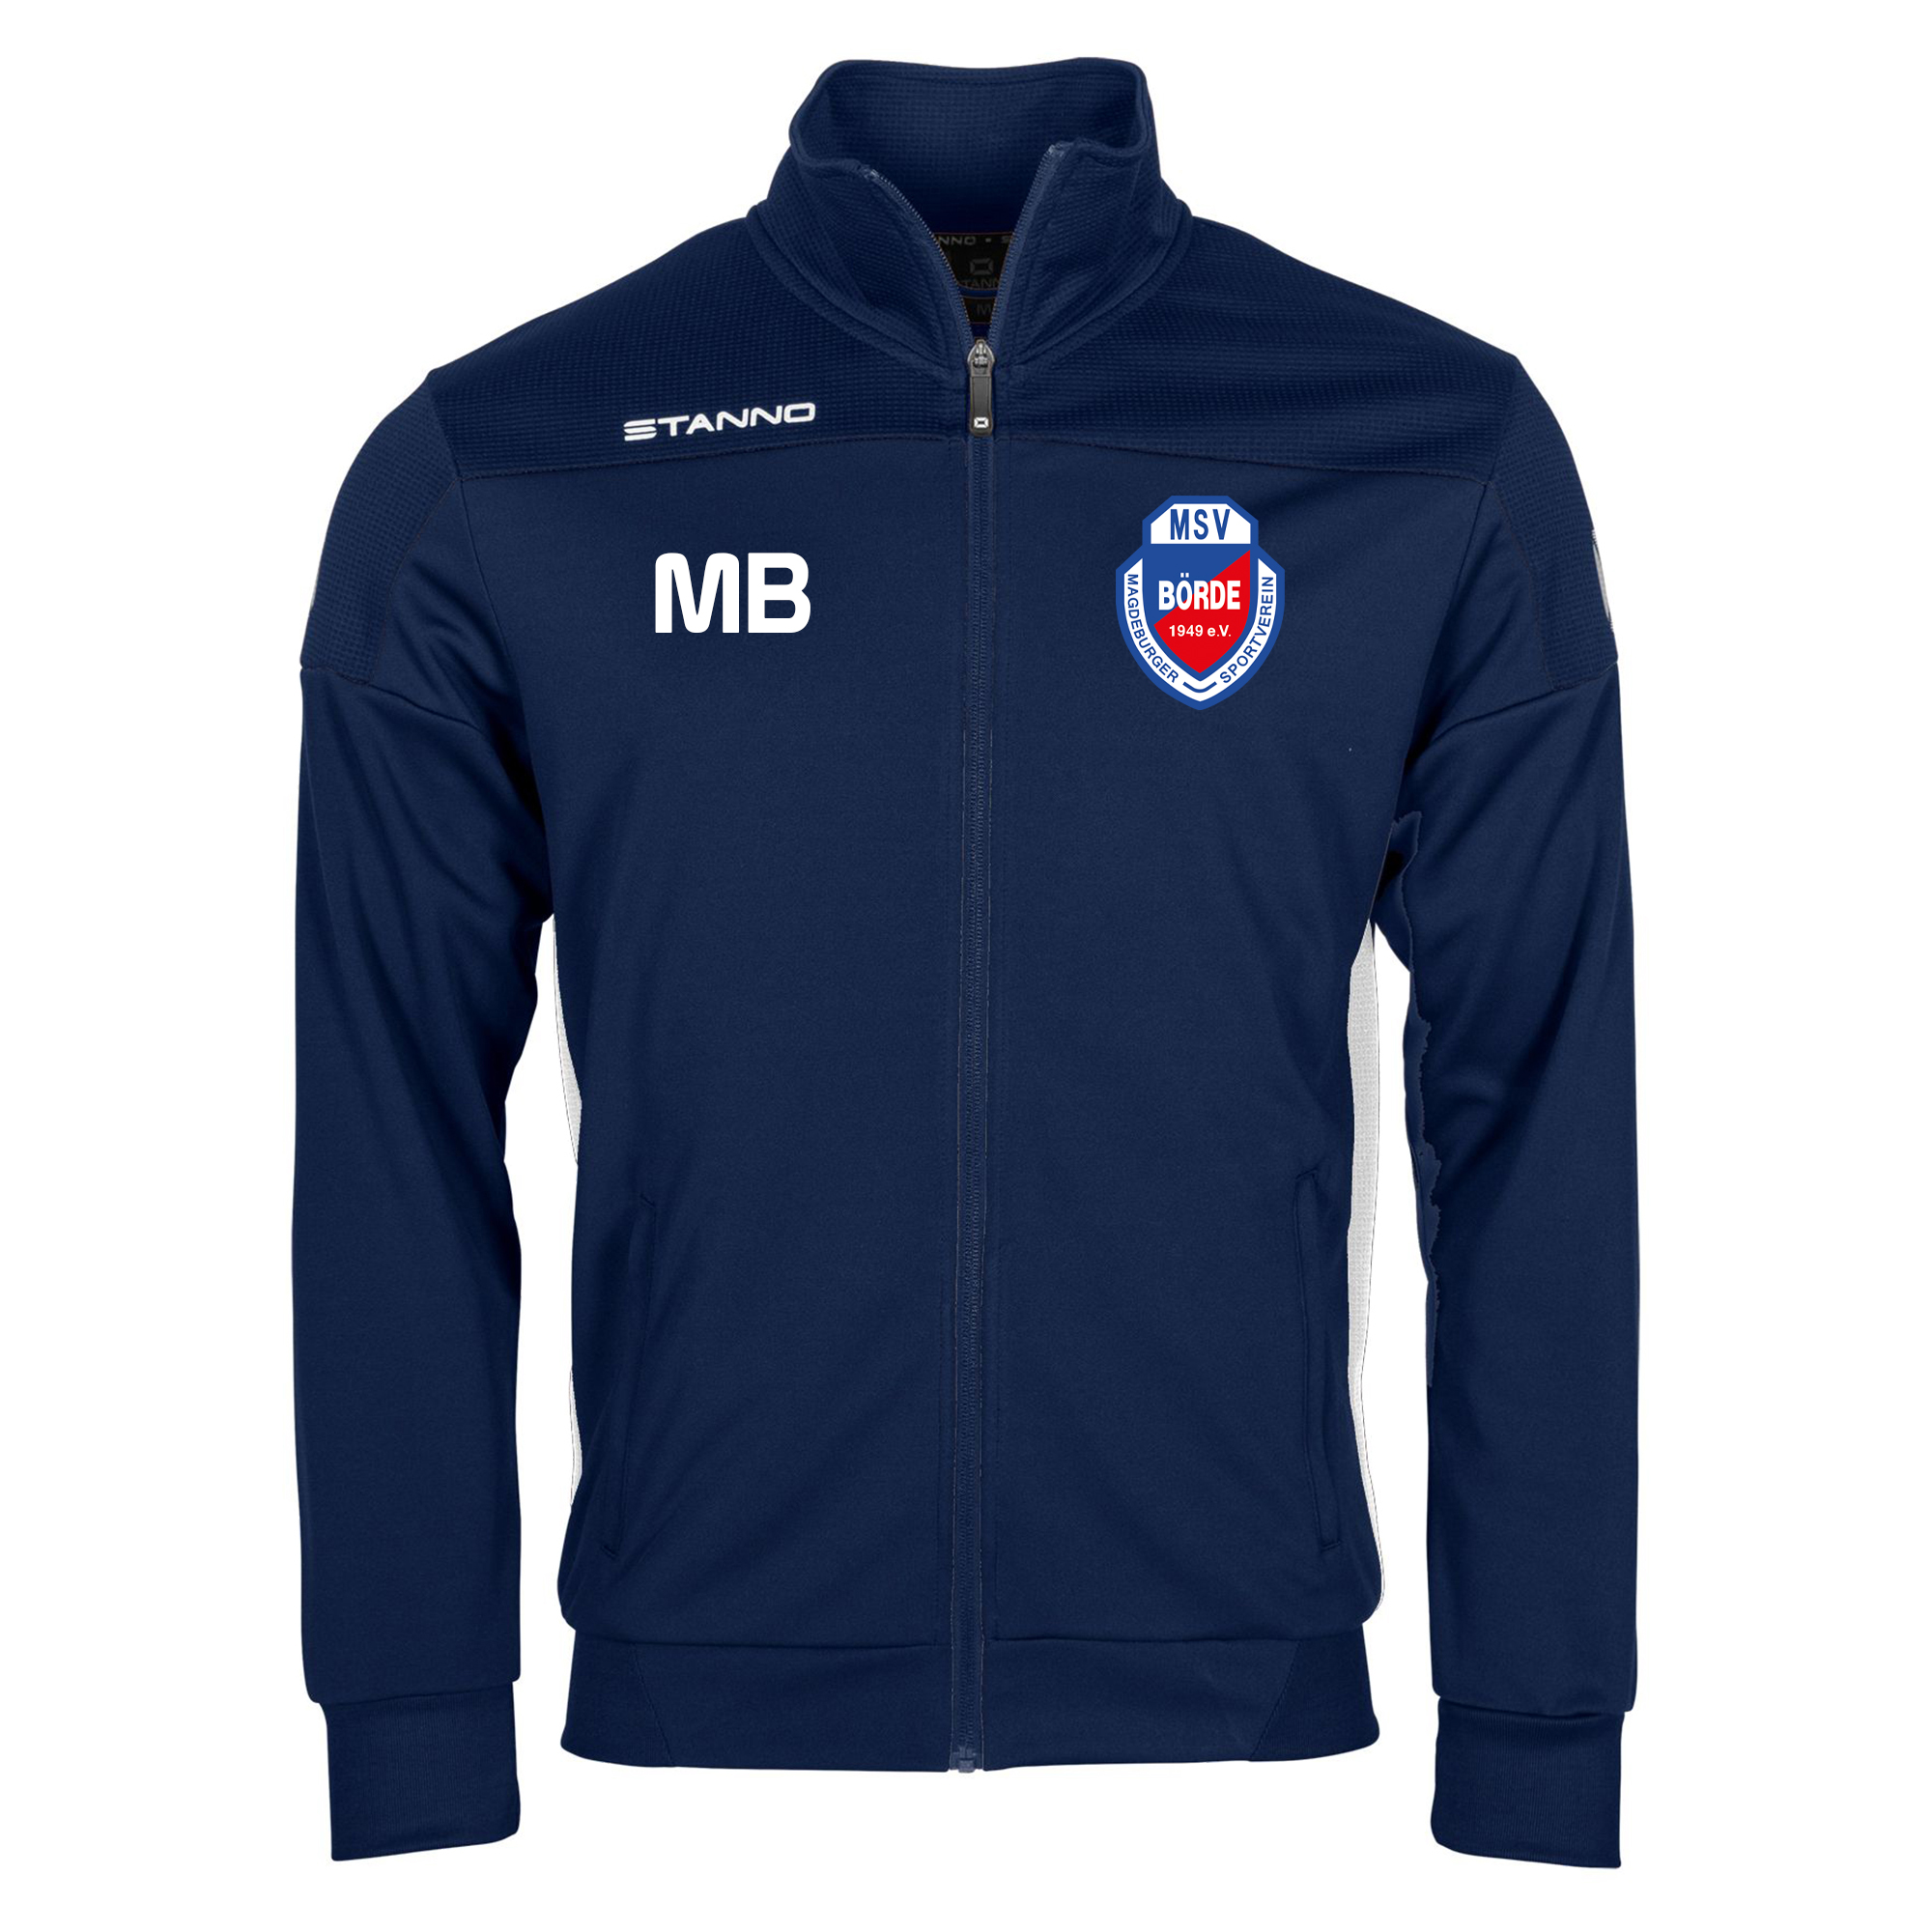 Magdeburger SV Börde Trainingsjacke